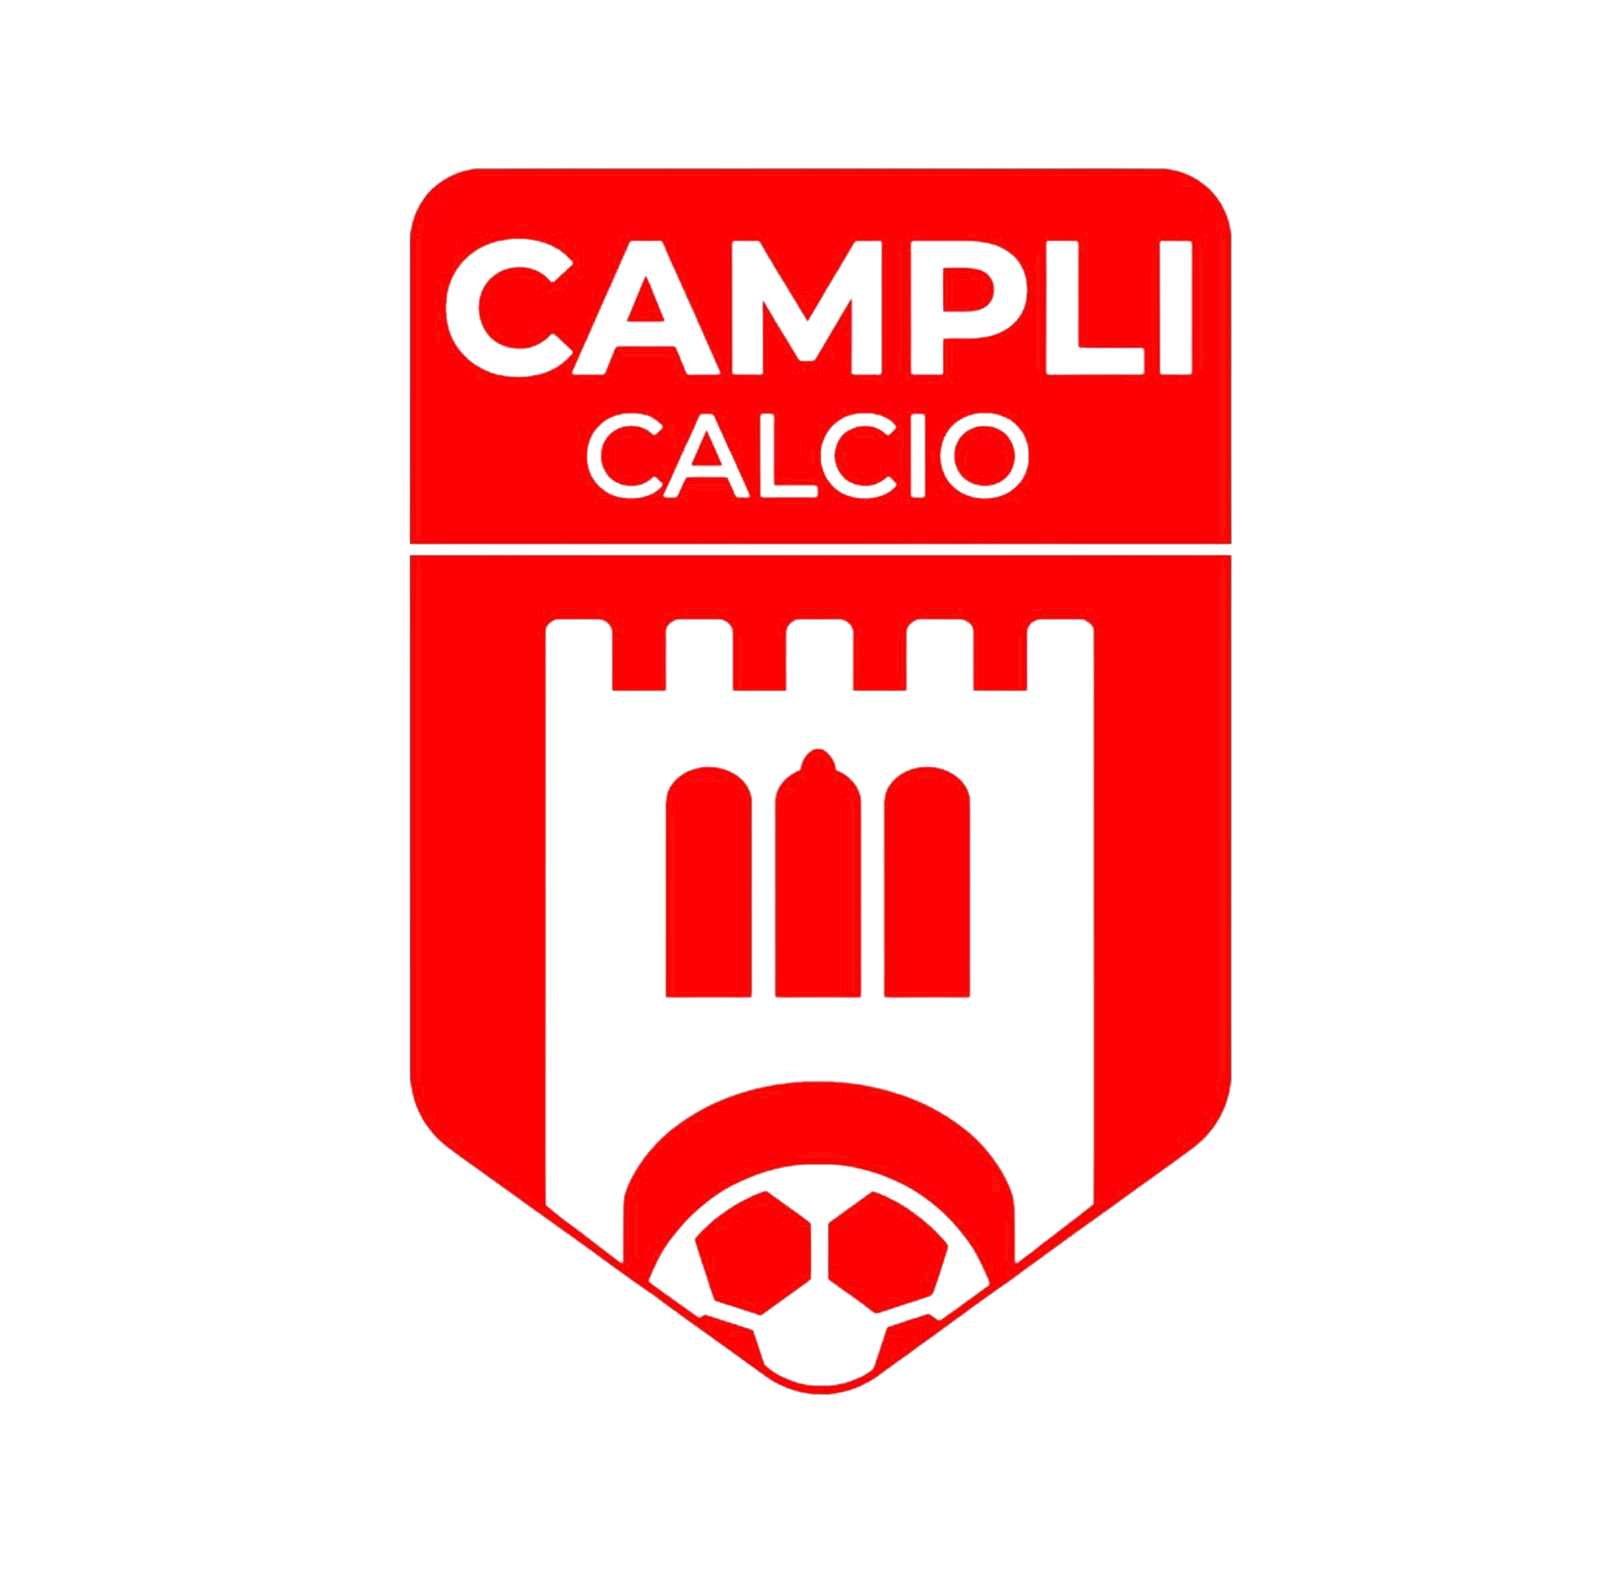 Campli Calcio